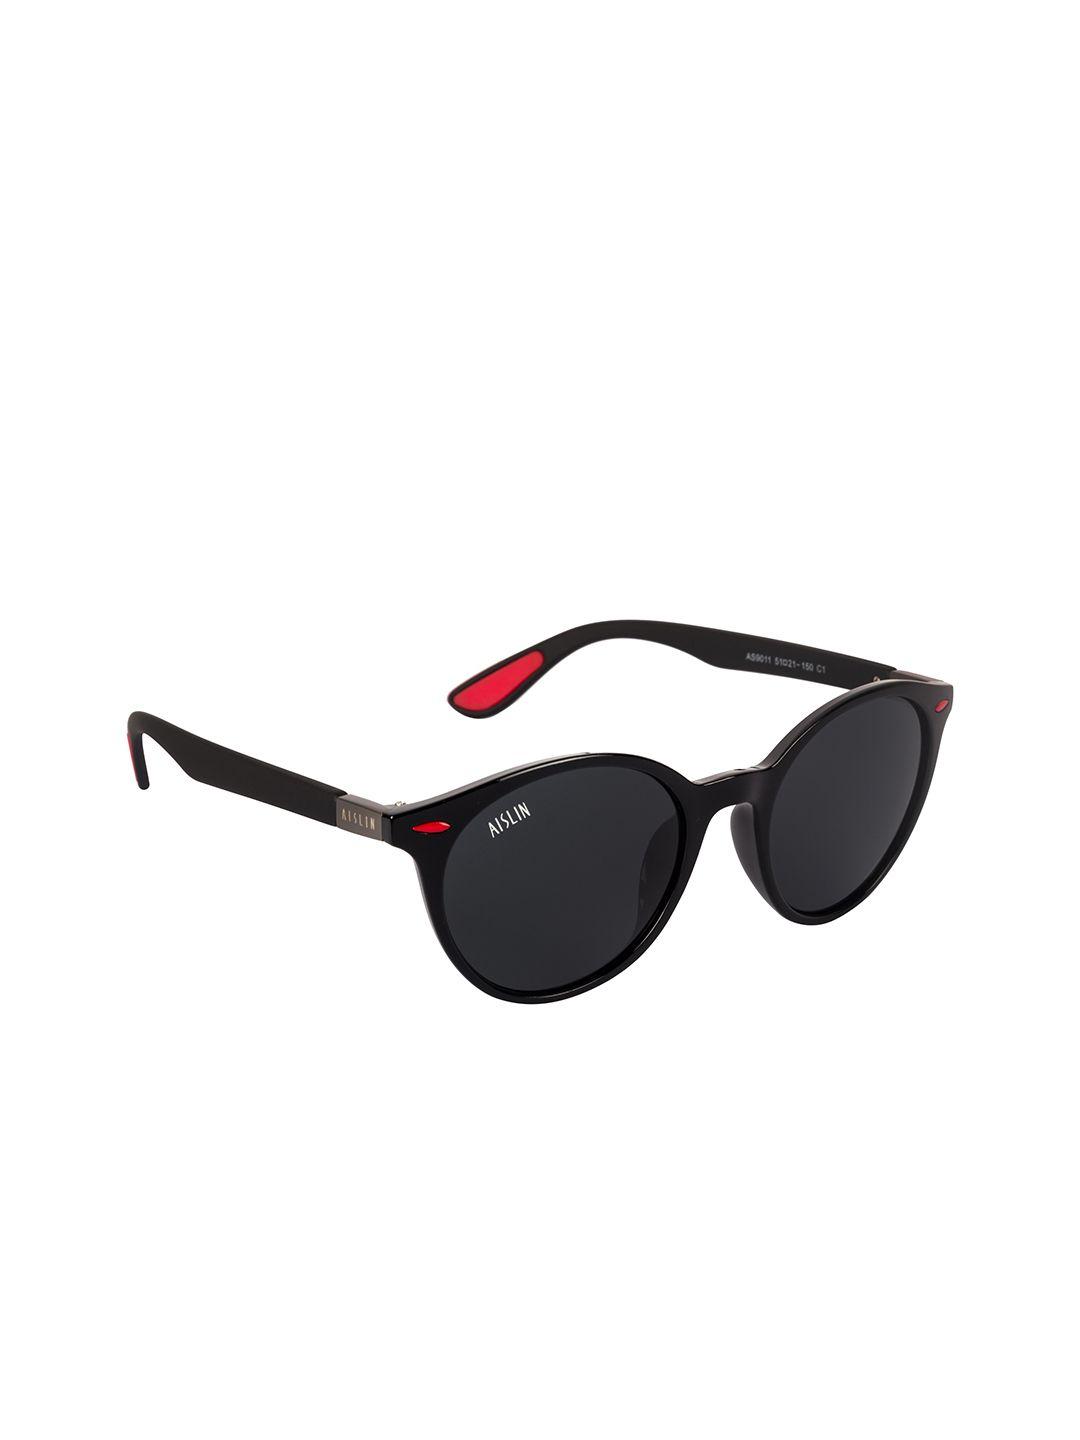 aislin unisex black lens & black round sunglasses with uv protected lens